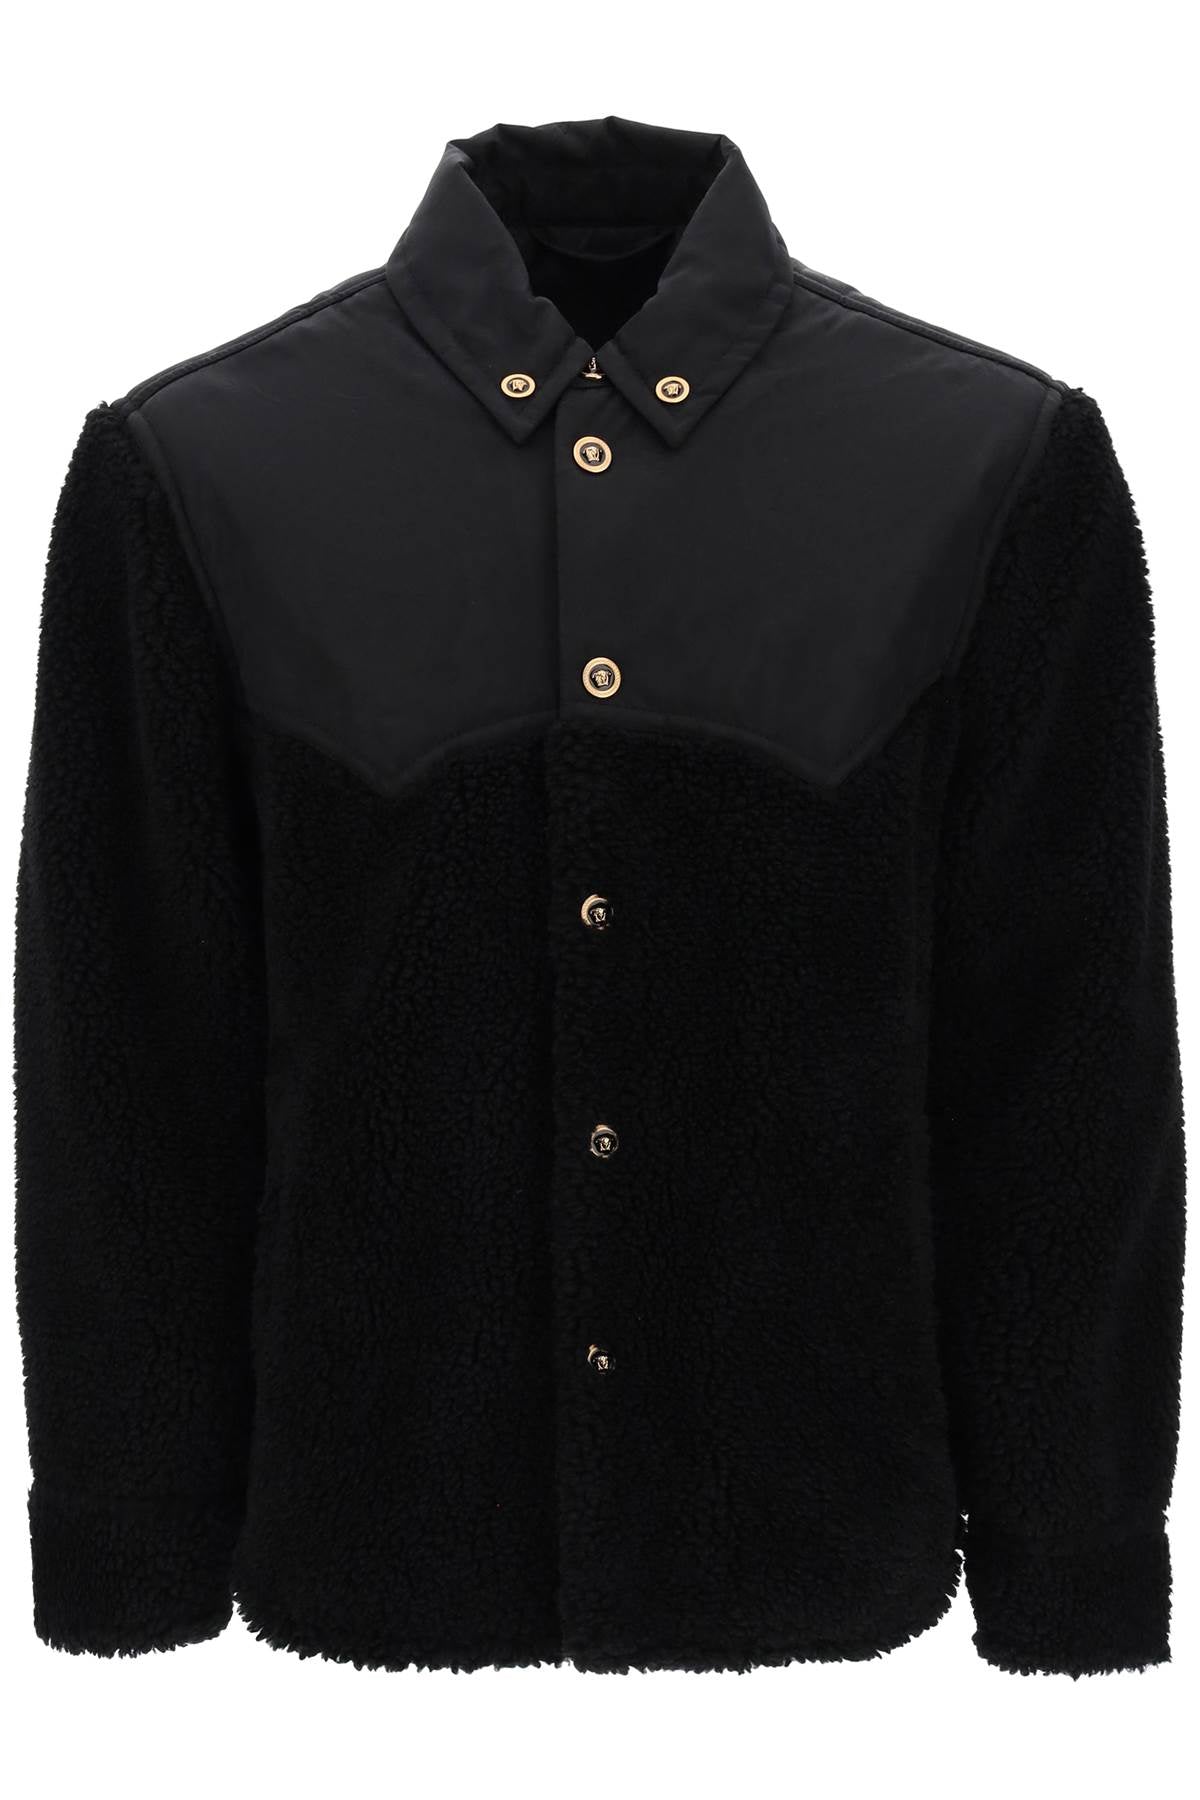 Versace barocco silhouette fleece jacket-0